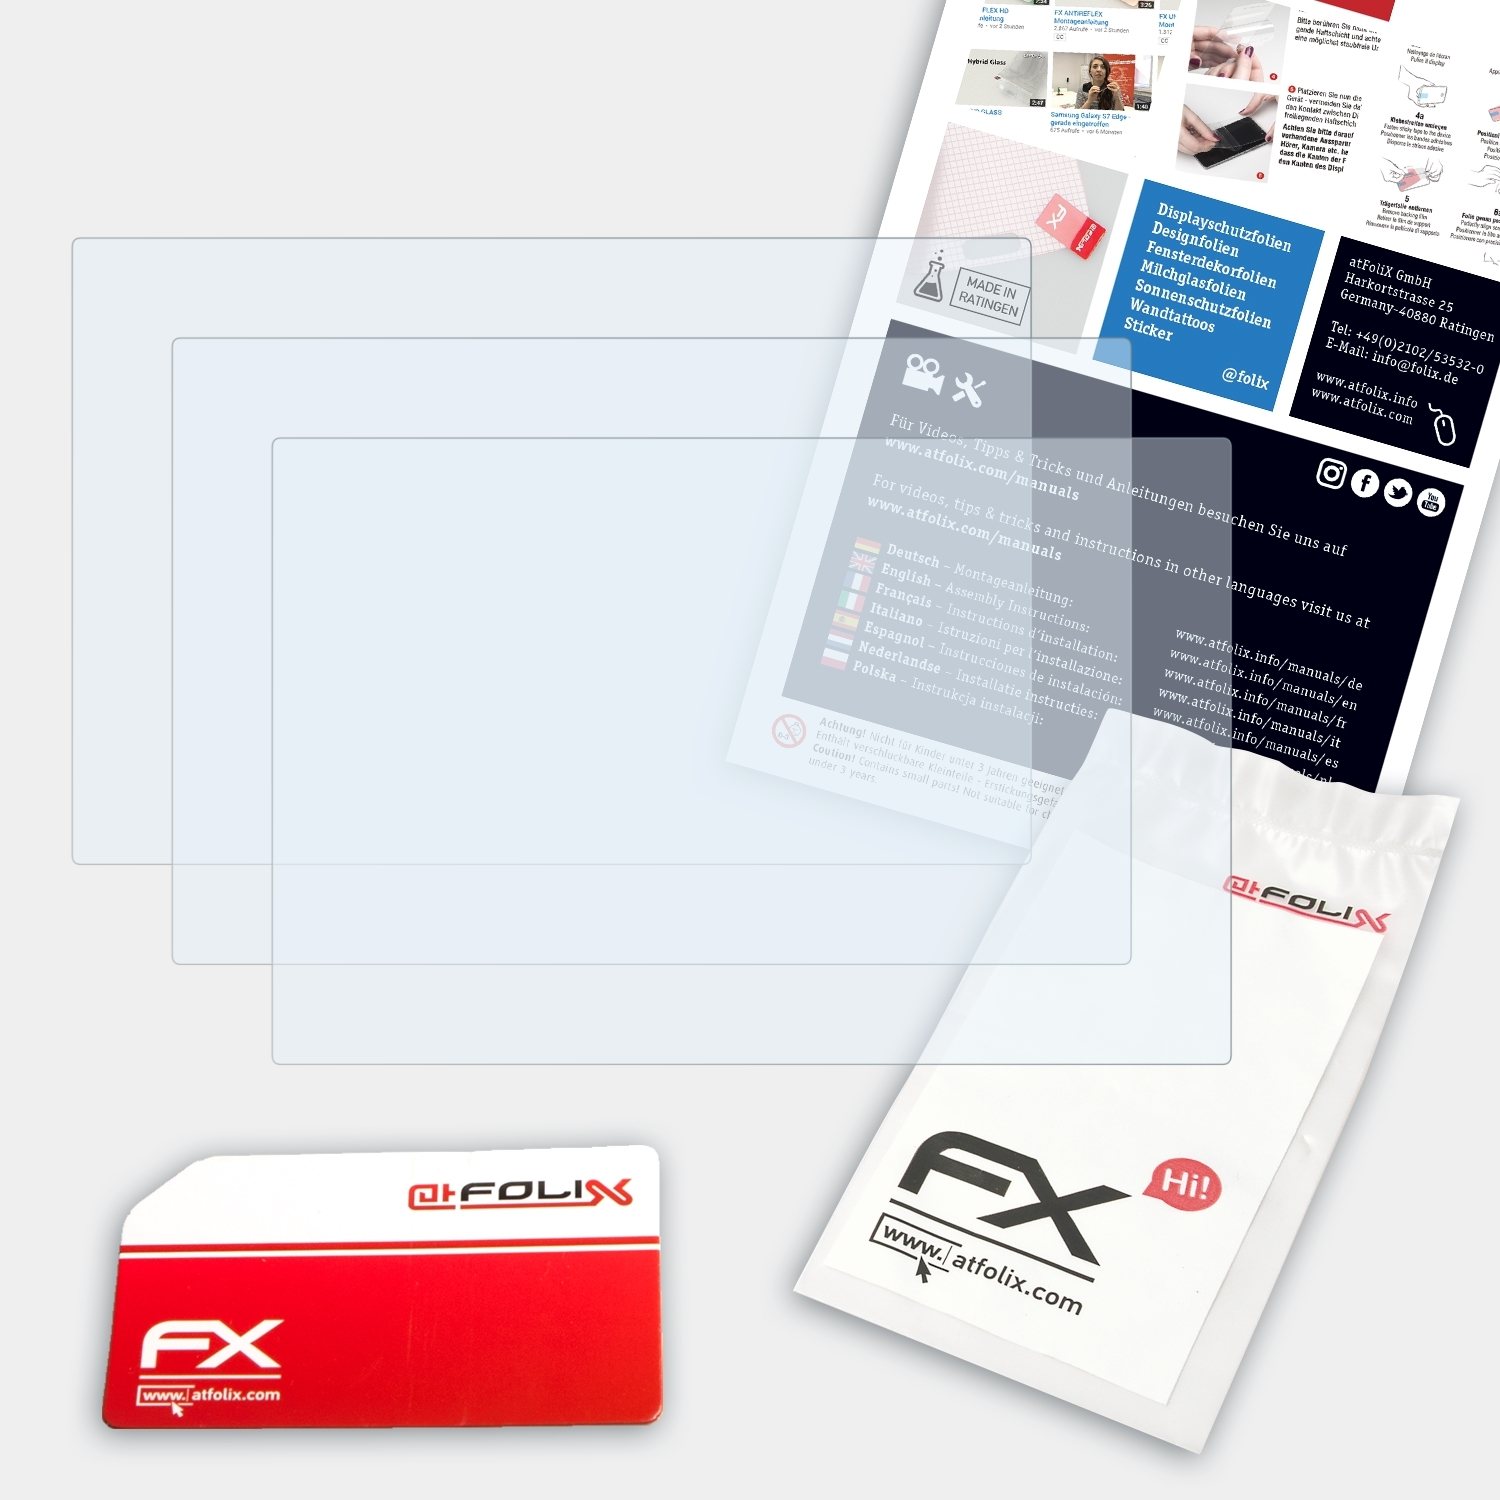 ATFOLIX Displayschutz(für Fujifilm 3x X-T2) FX-Clear